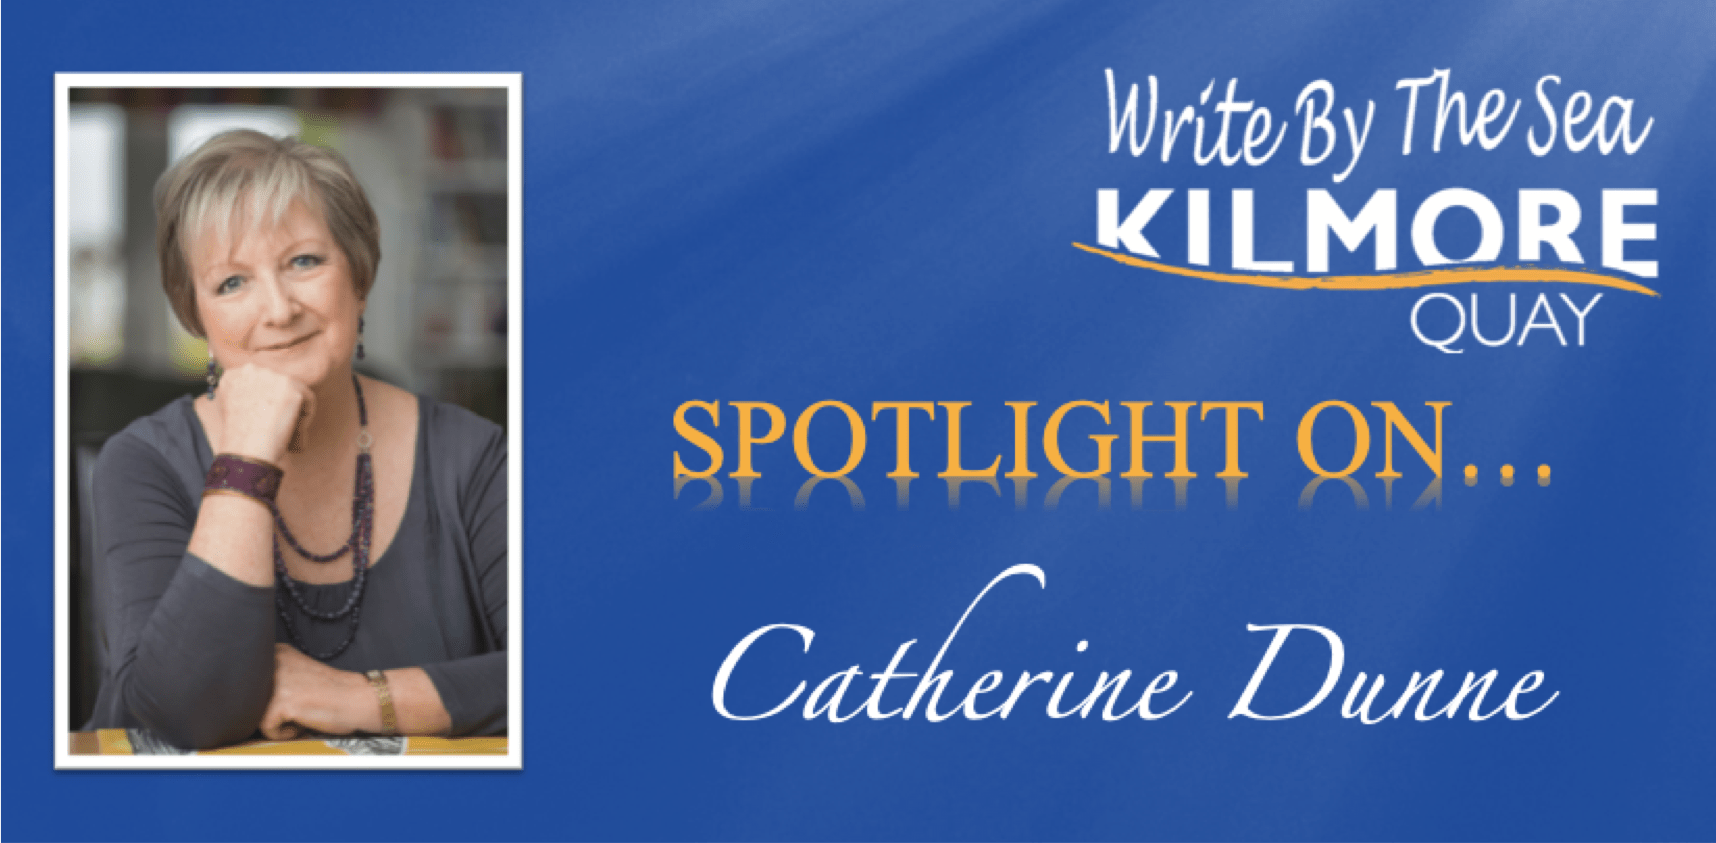 Spotlight on Catherine Dunne